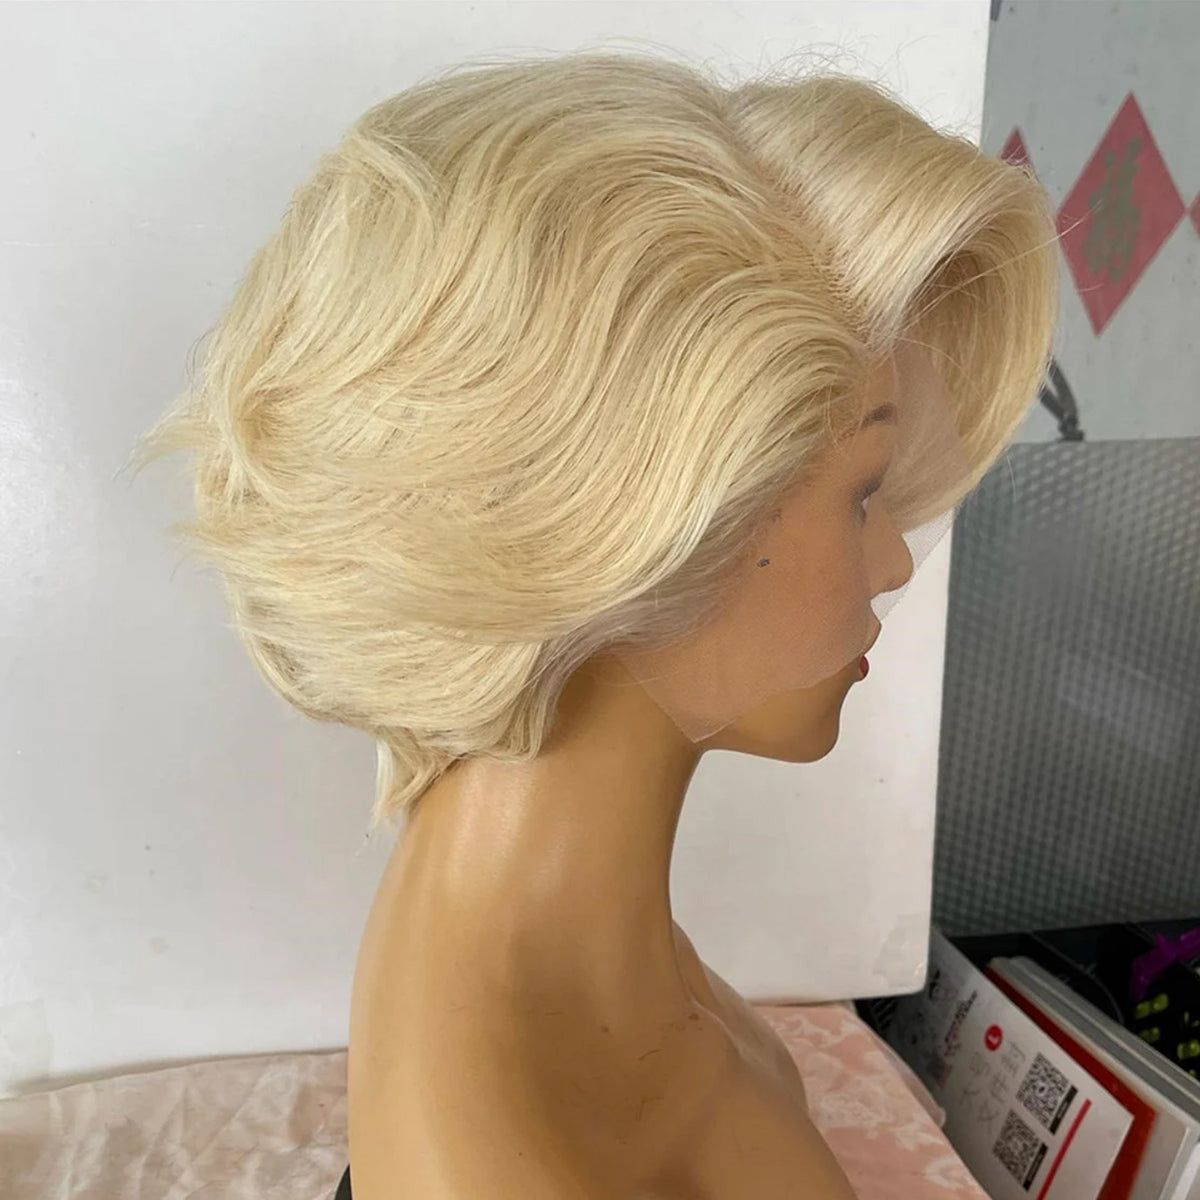 Dachic Hair 613 Blonde pixie cut 13x4 Lace Front Wig